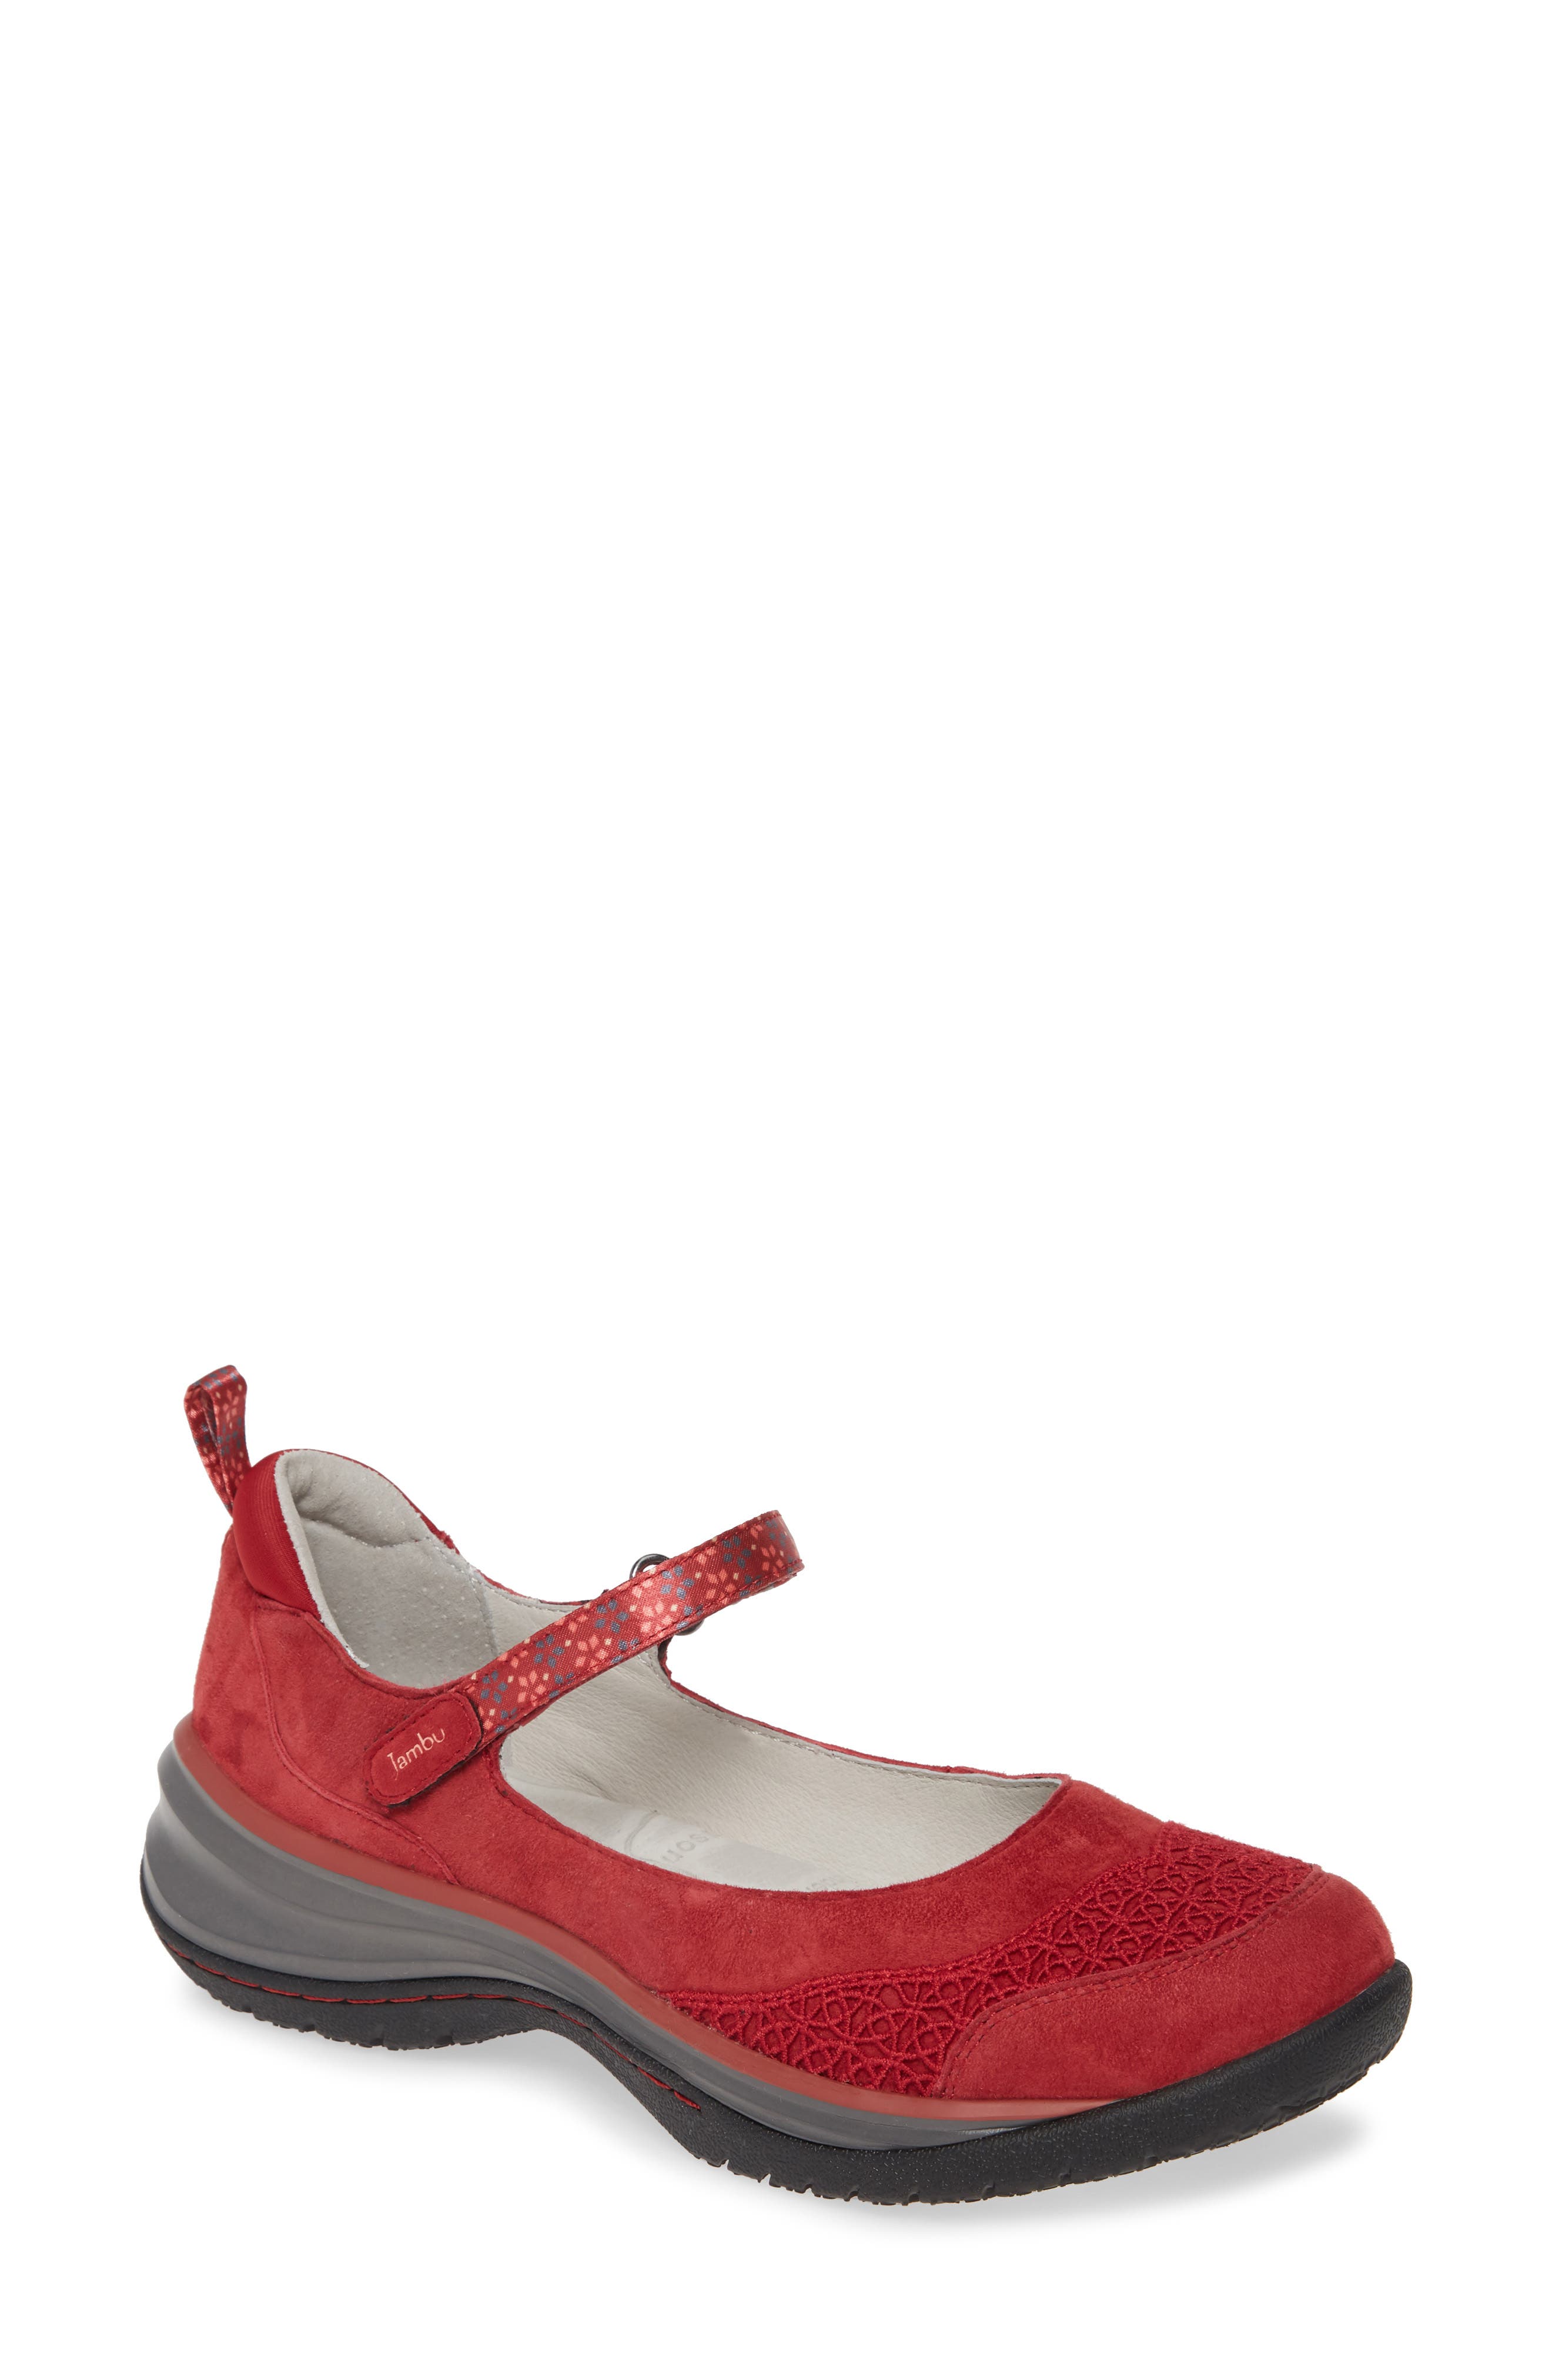 red jambu shoes